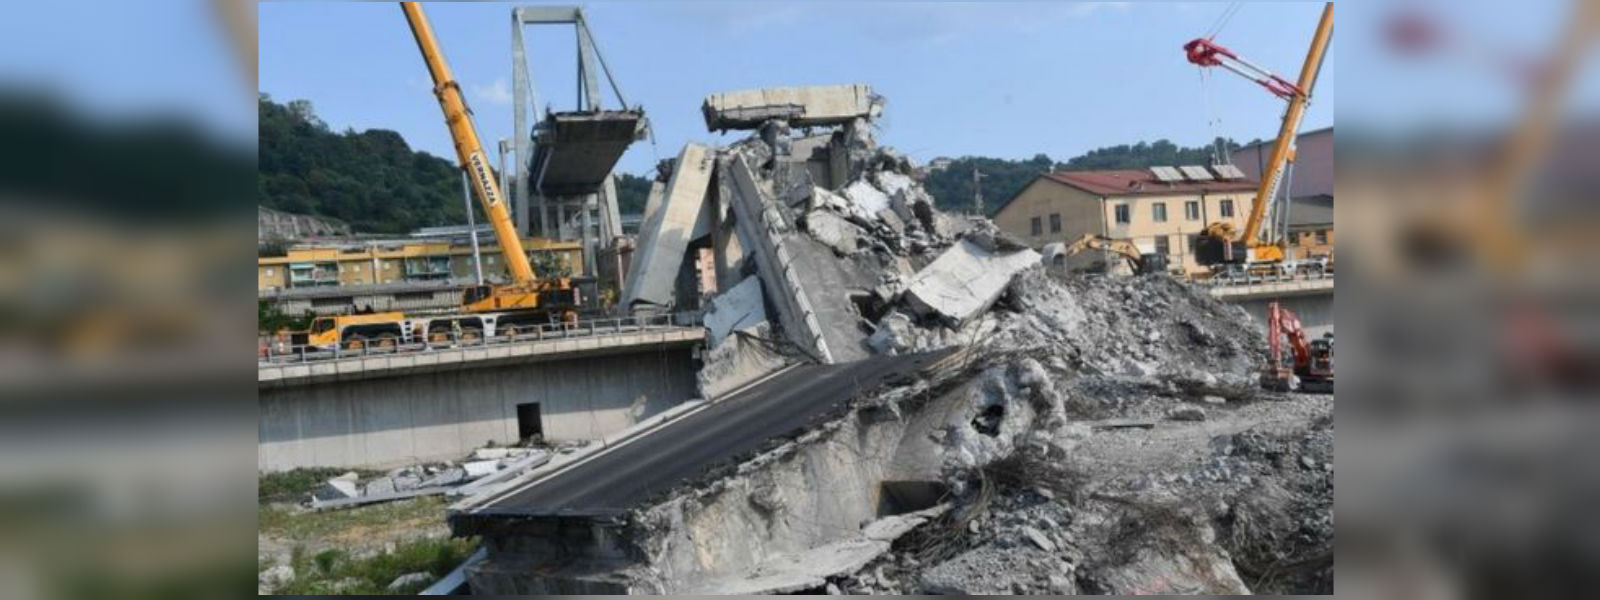 Genoa bridge collapse killed 43 people and shocked